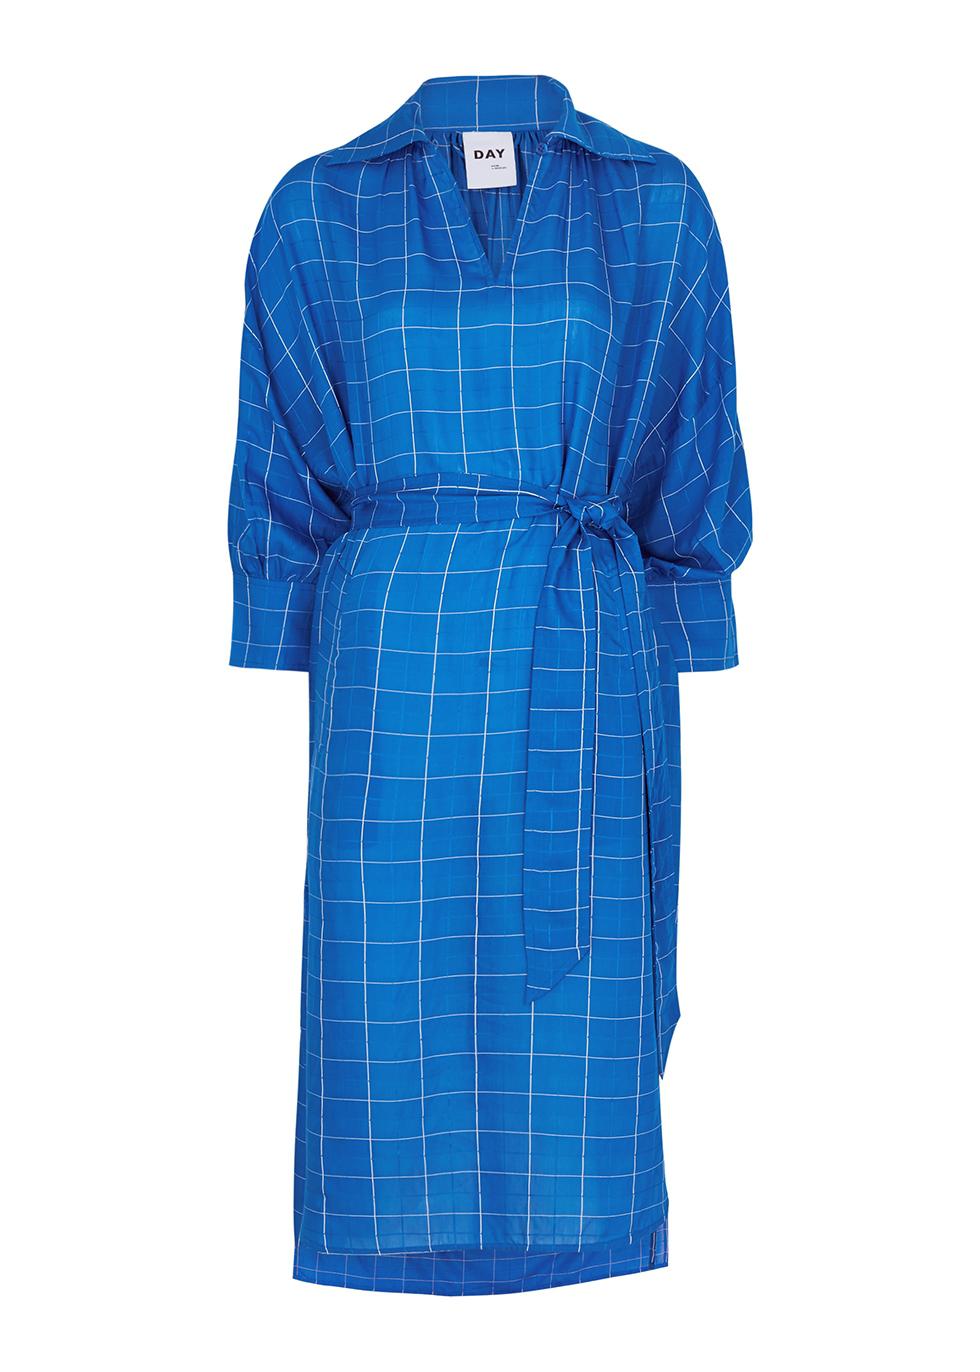 Colette blue checked woven midi dress by DAY BIRGER ET MIKKELSEN